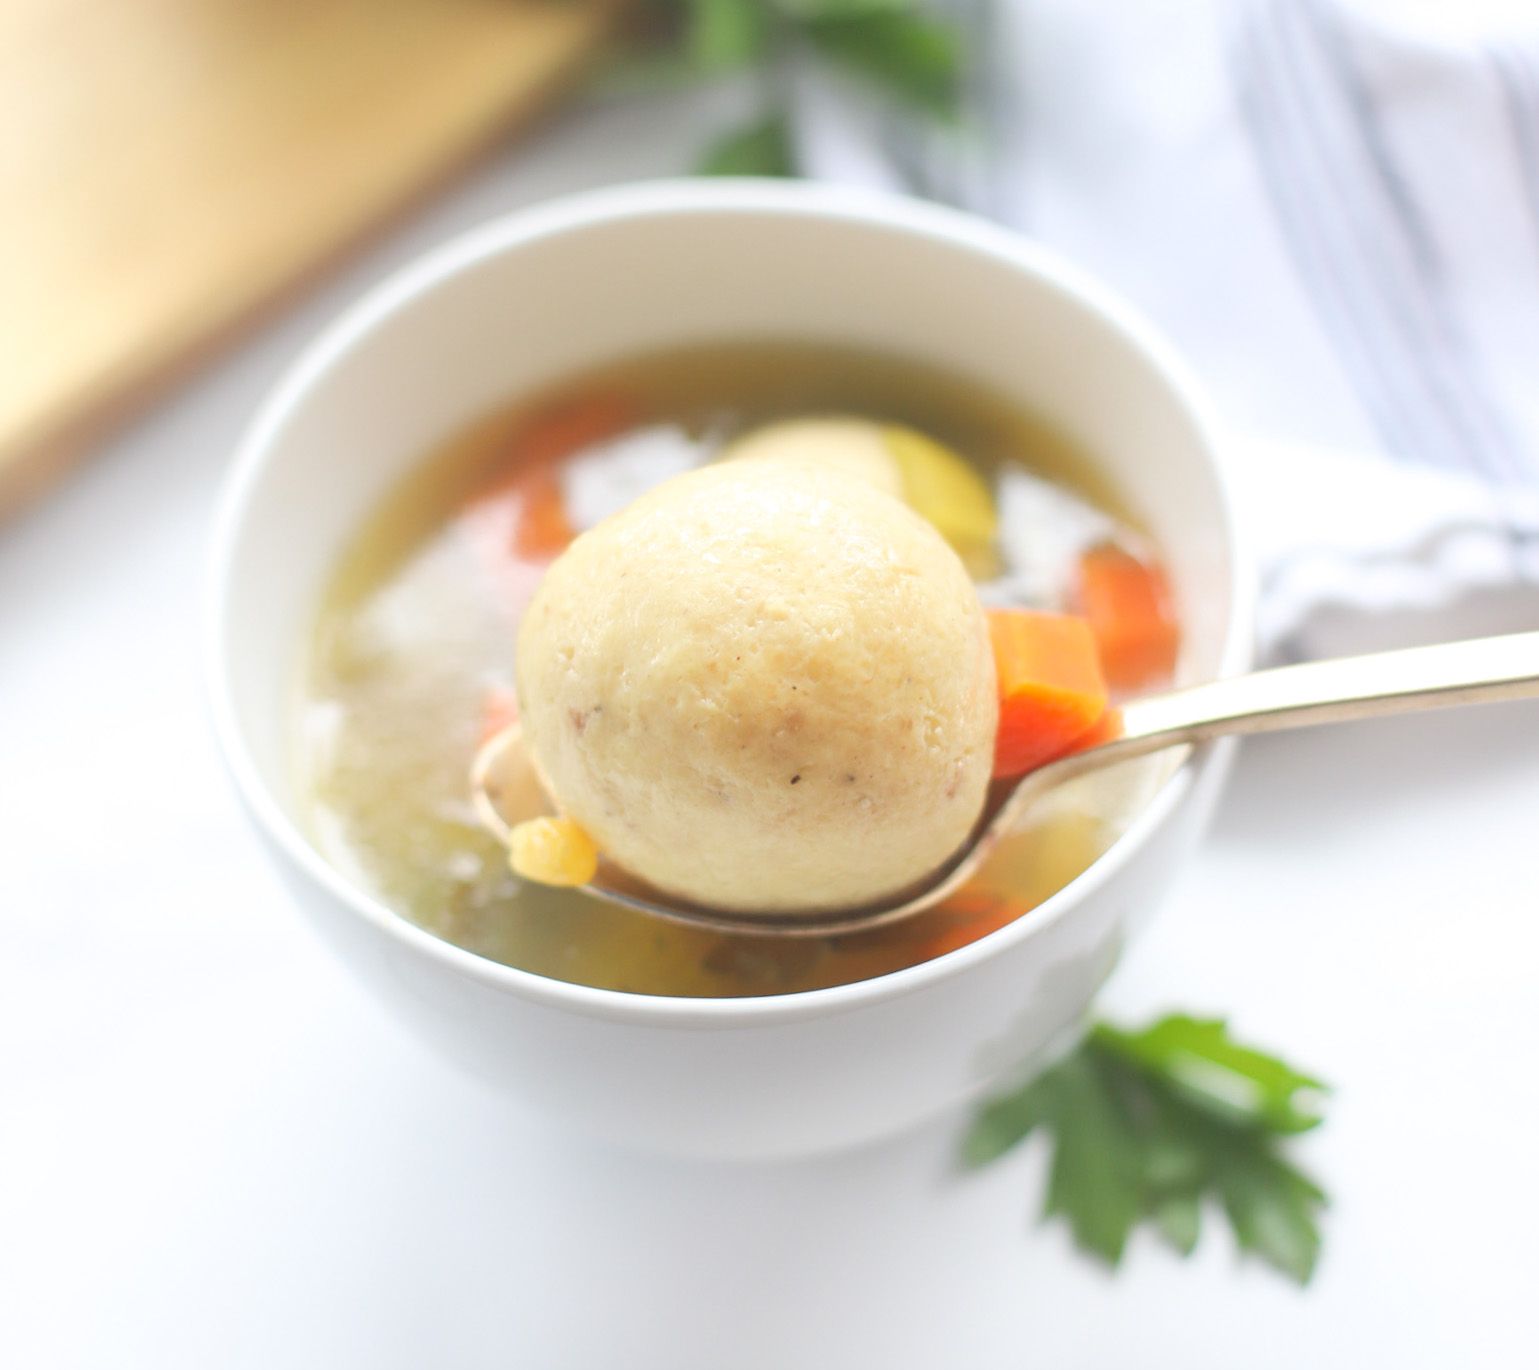 Homemade Matzo Ball Soup - Our Family Favorite Classic Jewish Chicken Stock with the Best Matzoh Balls | @glitterinclexi | GLITTERINC.COM